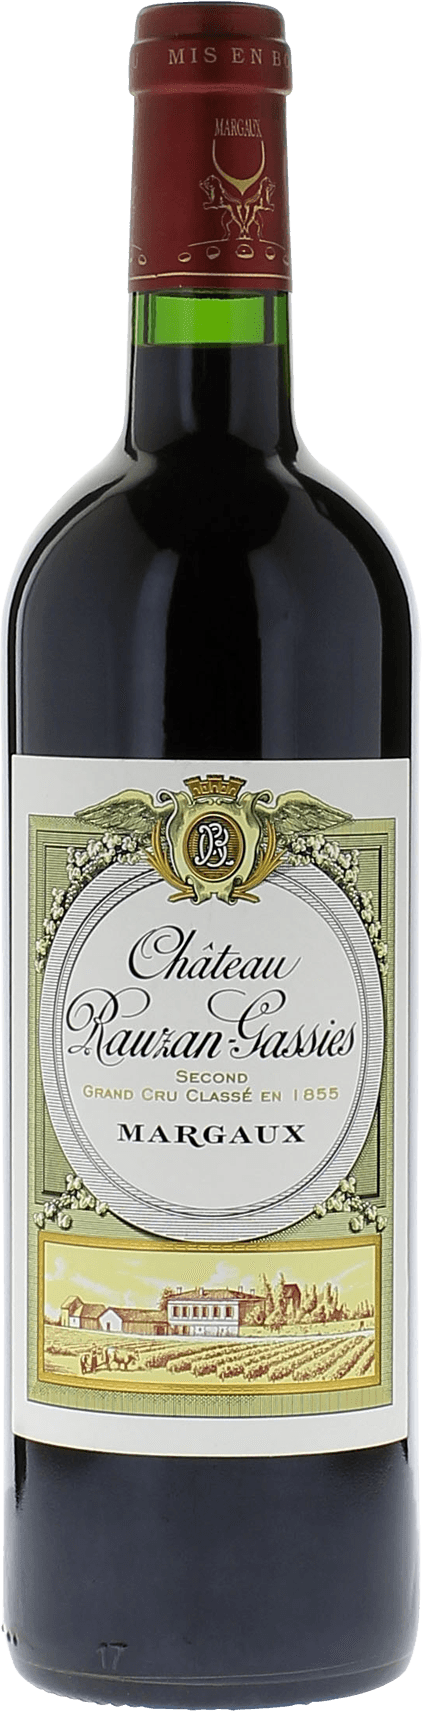 Rauzan gassies 1997 2me Grand cru class Margaux, Bordeaux rouge